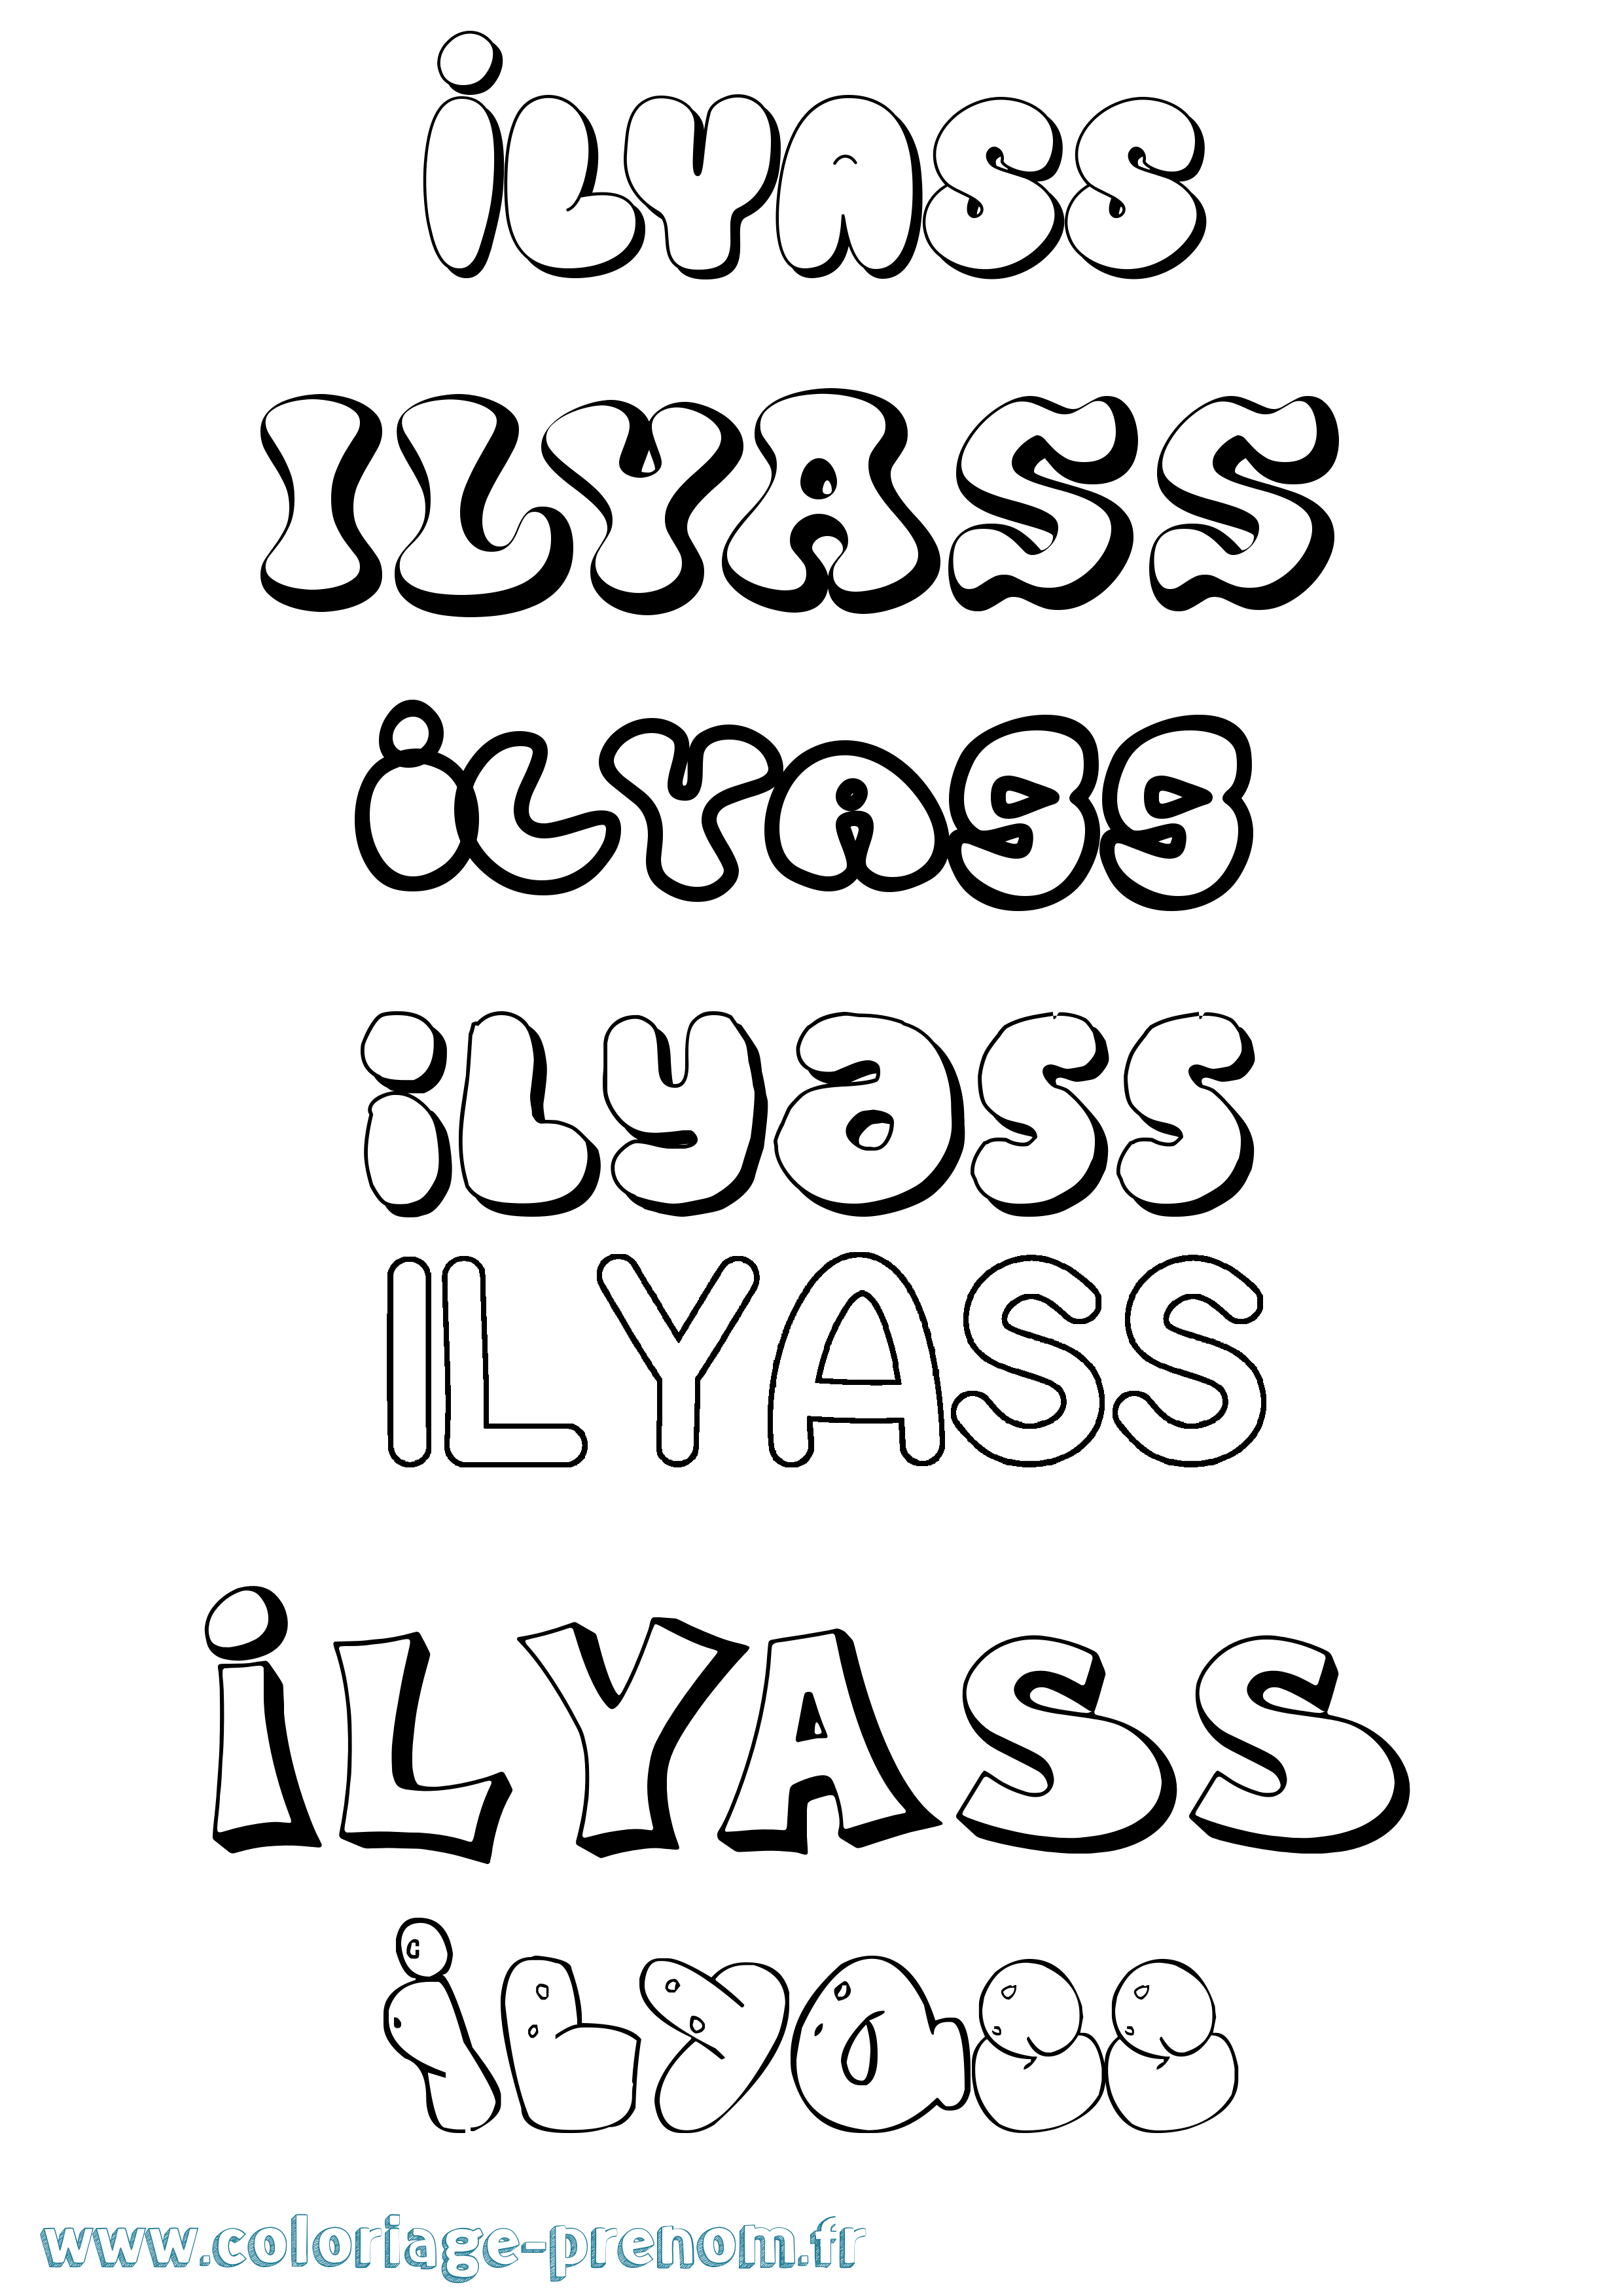 Coloriage prénom Ilyass